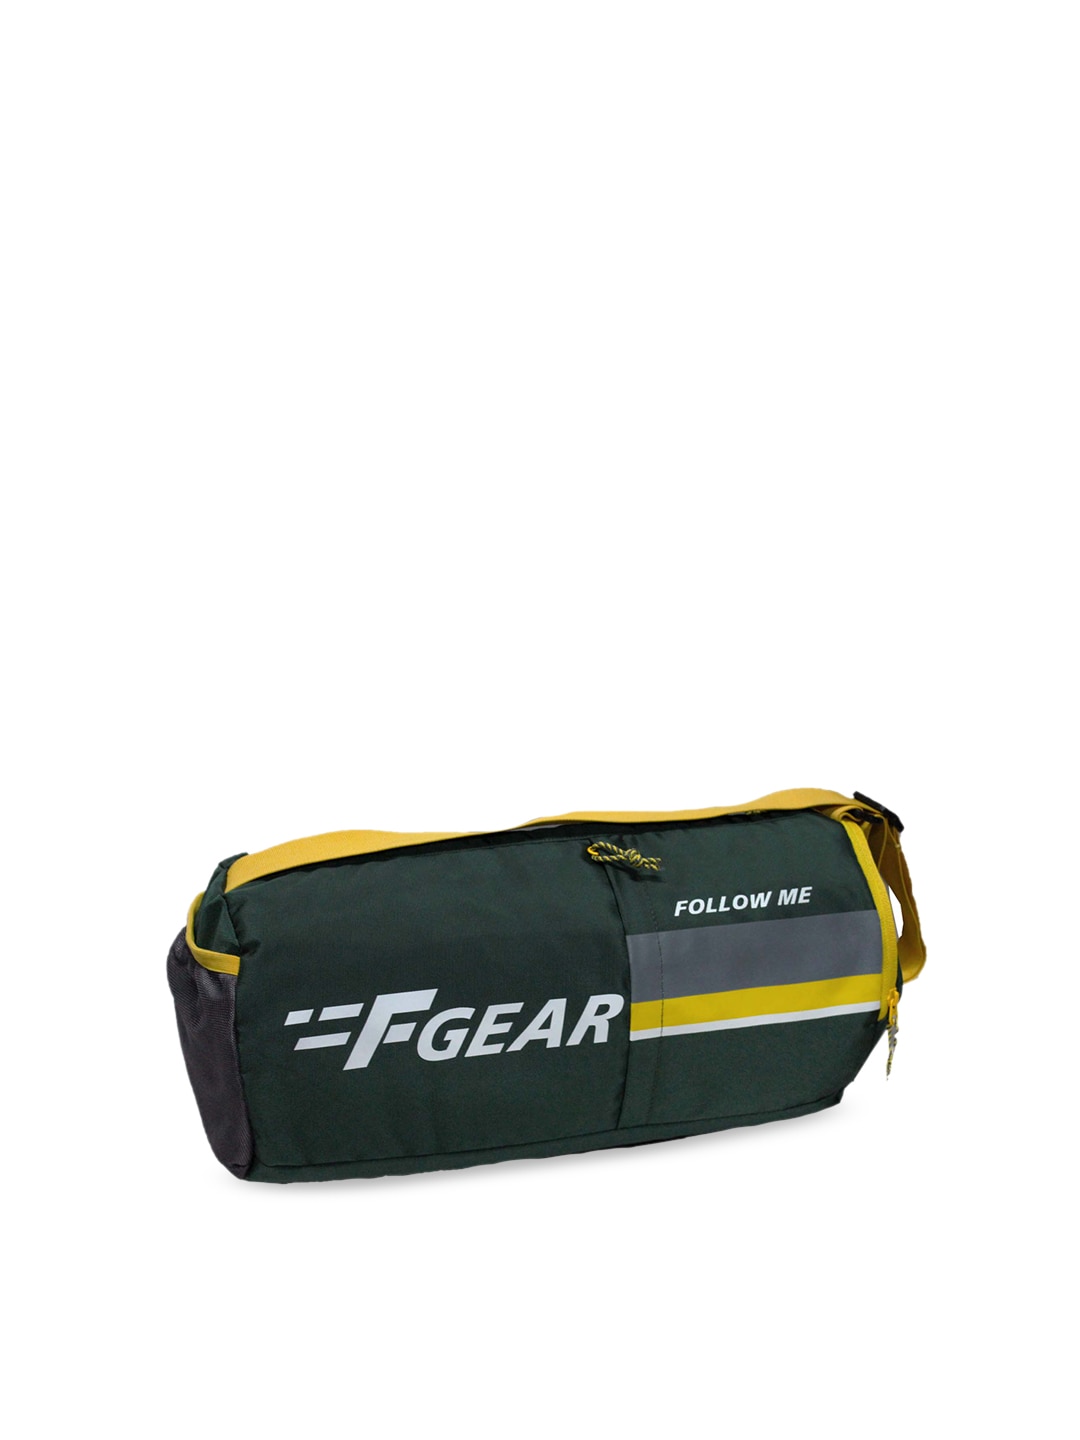 F Gear Unisex Green & Yellow Printed Duffle Bag Price in India